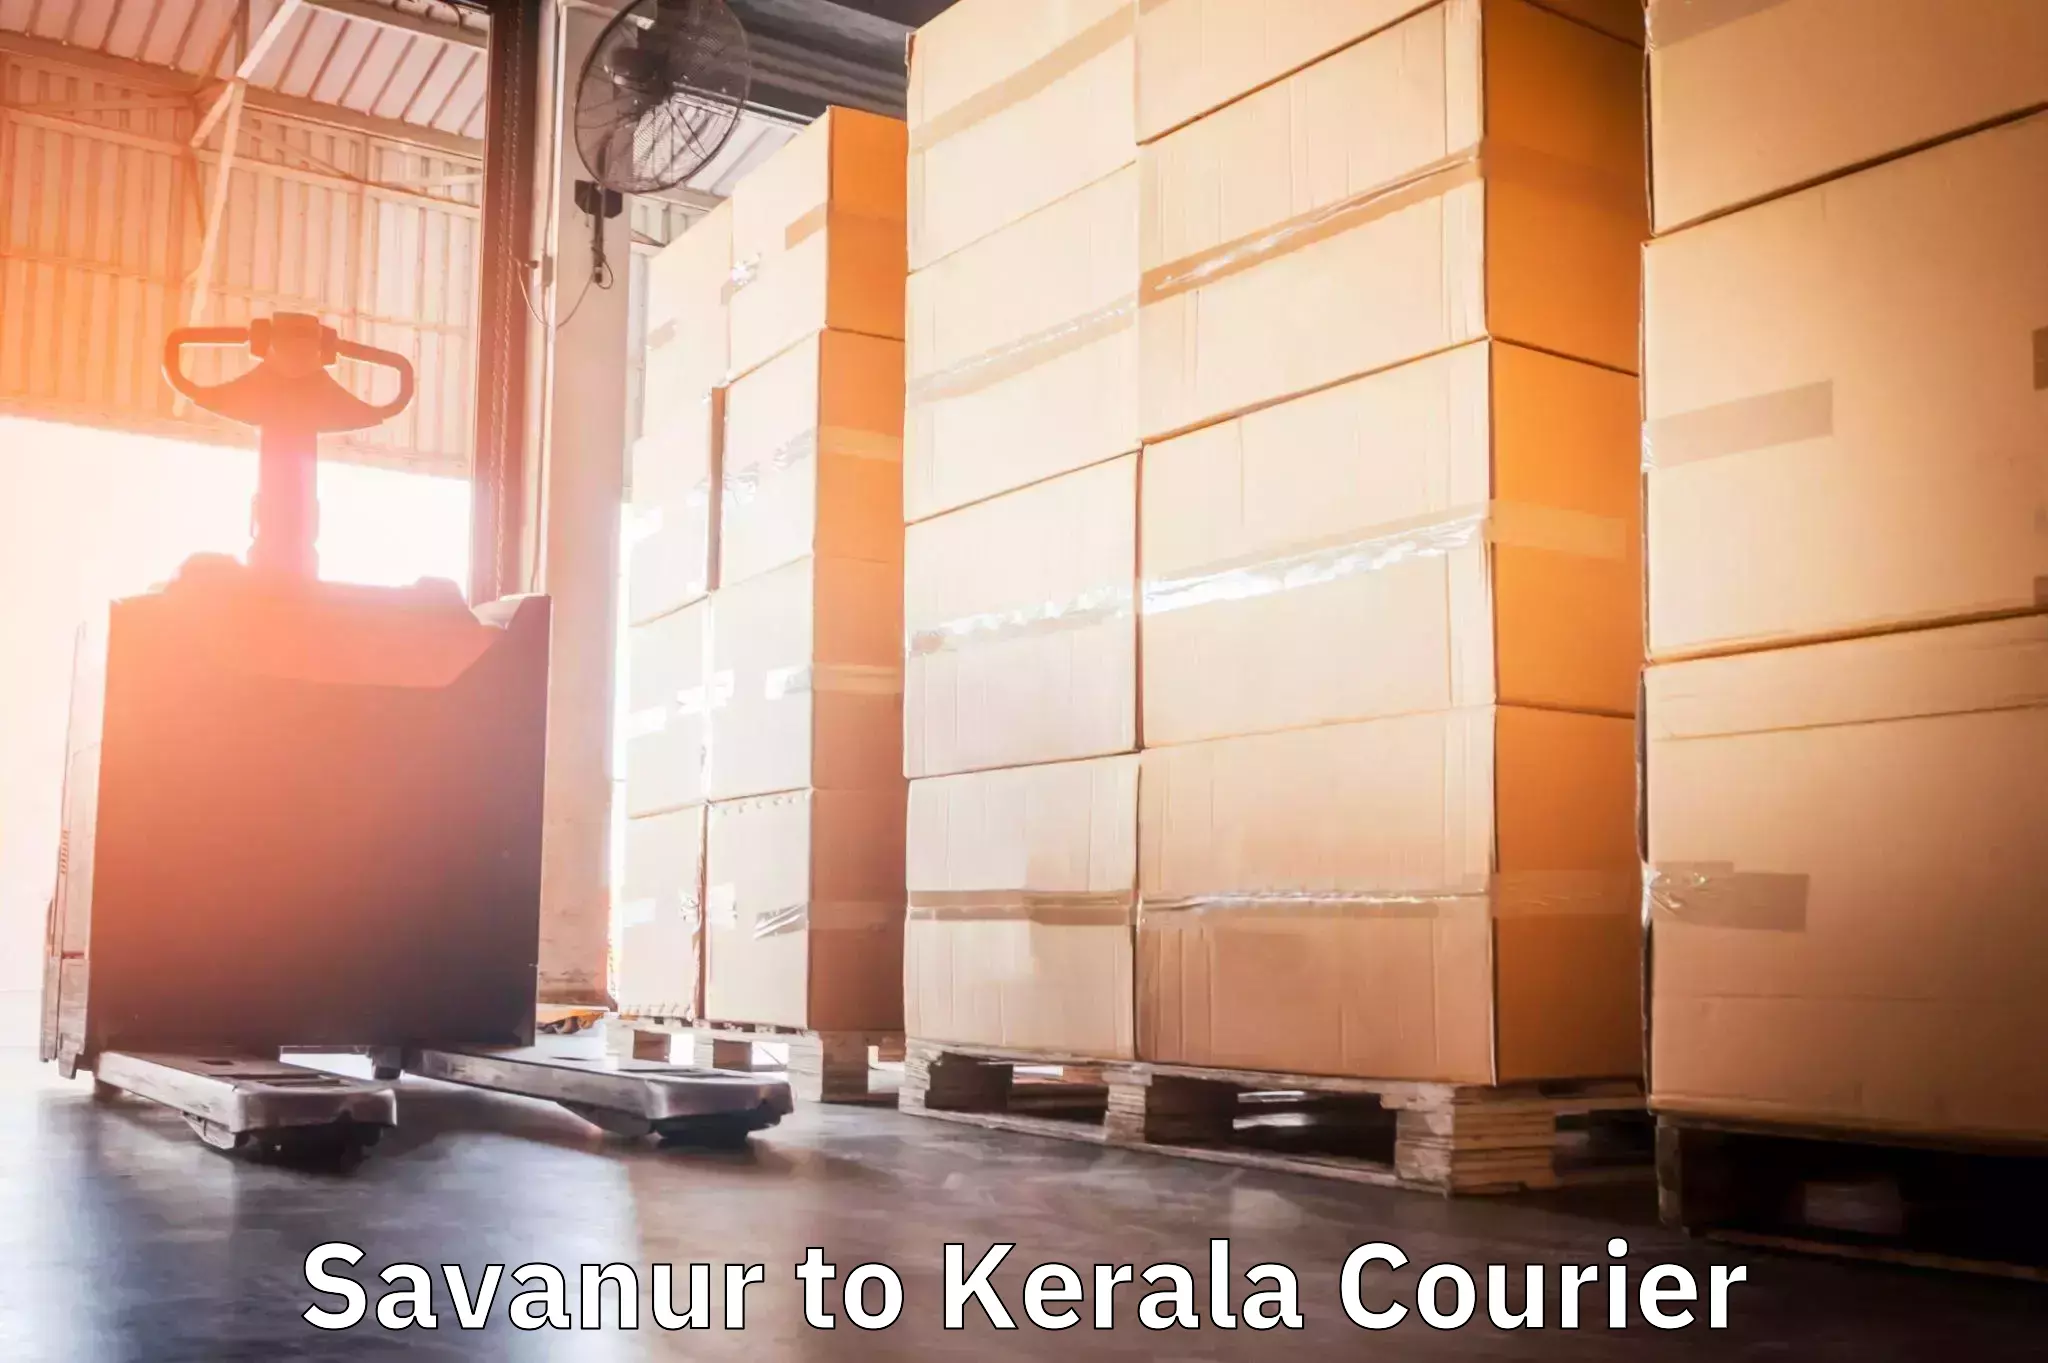 Customer-centric shipping Savanur to Thiruvananthapuram